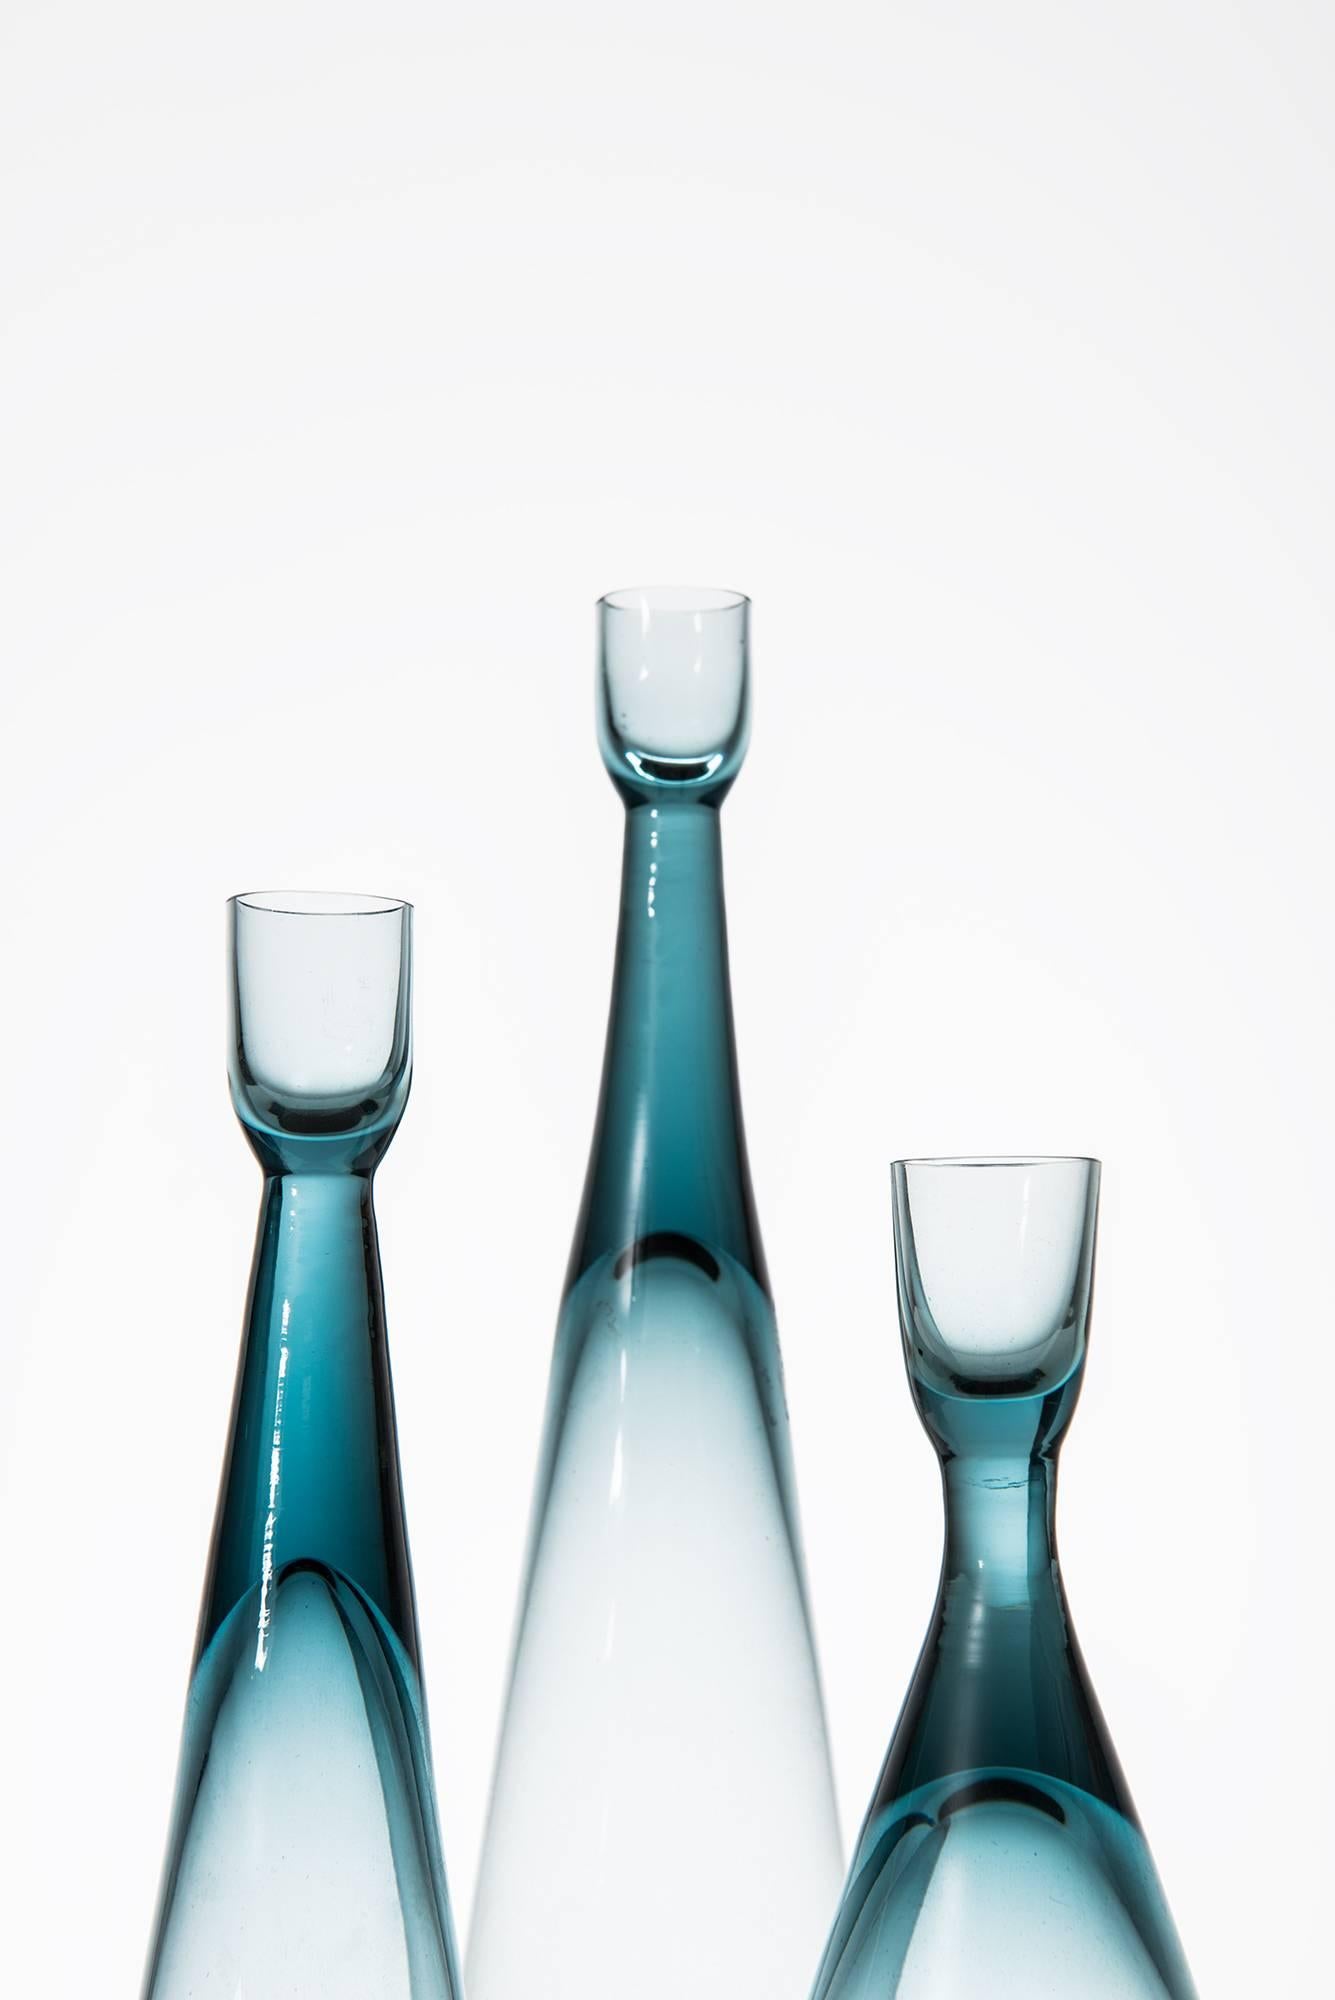 Scandinavian Modern Bengt Edenfalk Candlesticks in Glass by Skruf Glasbruk in Sweden